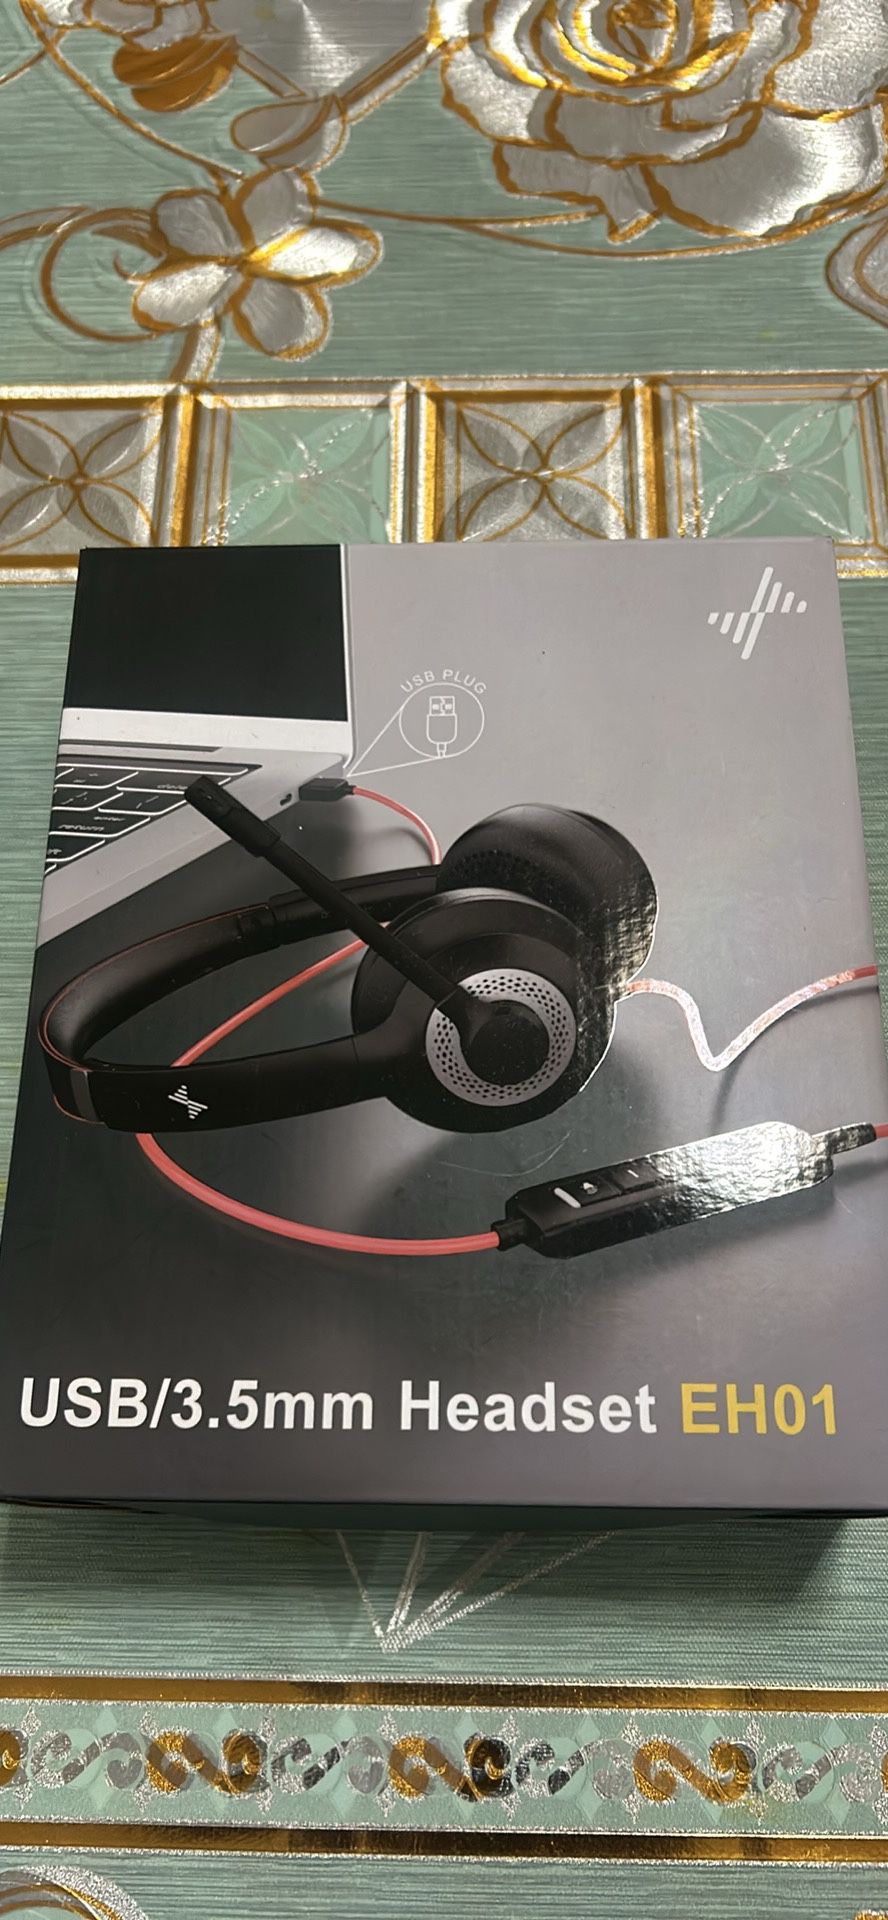 USB/3.5mm Headset EH01